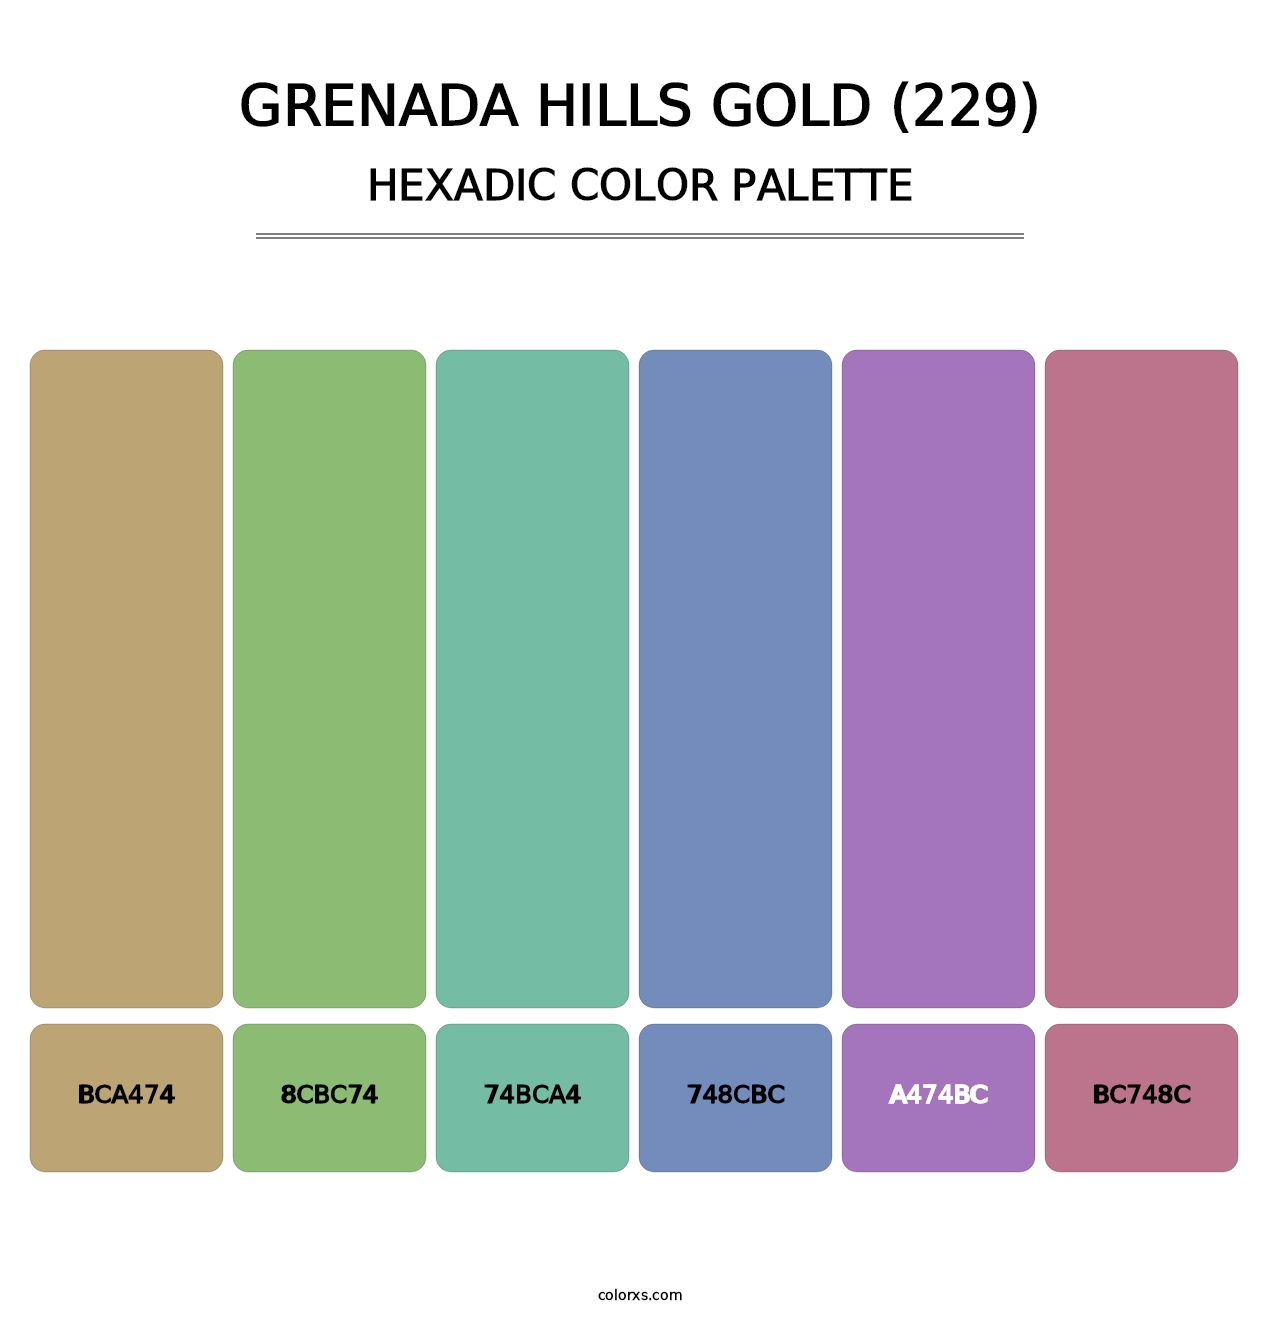 Grenada Hills Gold (229) - Hexadic Color Palette